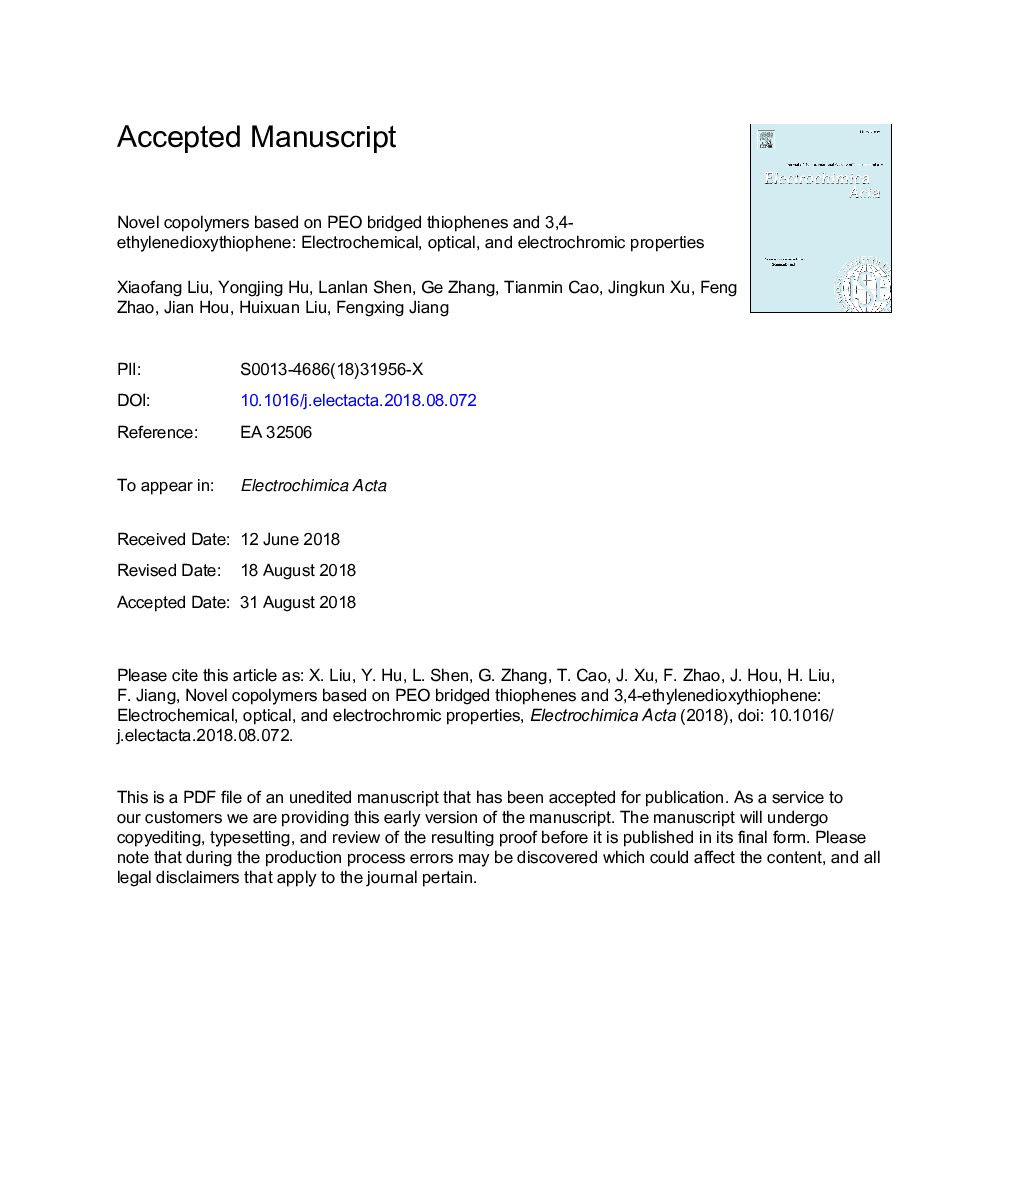 Novel copolymers based on PEO bridged thiophenes and 3,4-ethylenedioxythiophene: Electrochemical, optical, and electrochromic properties